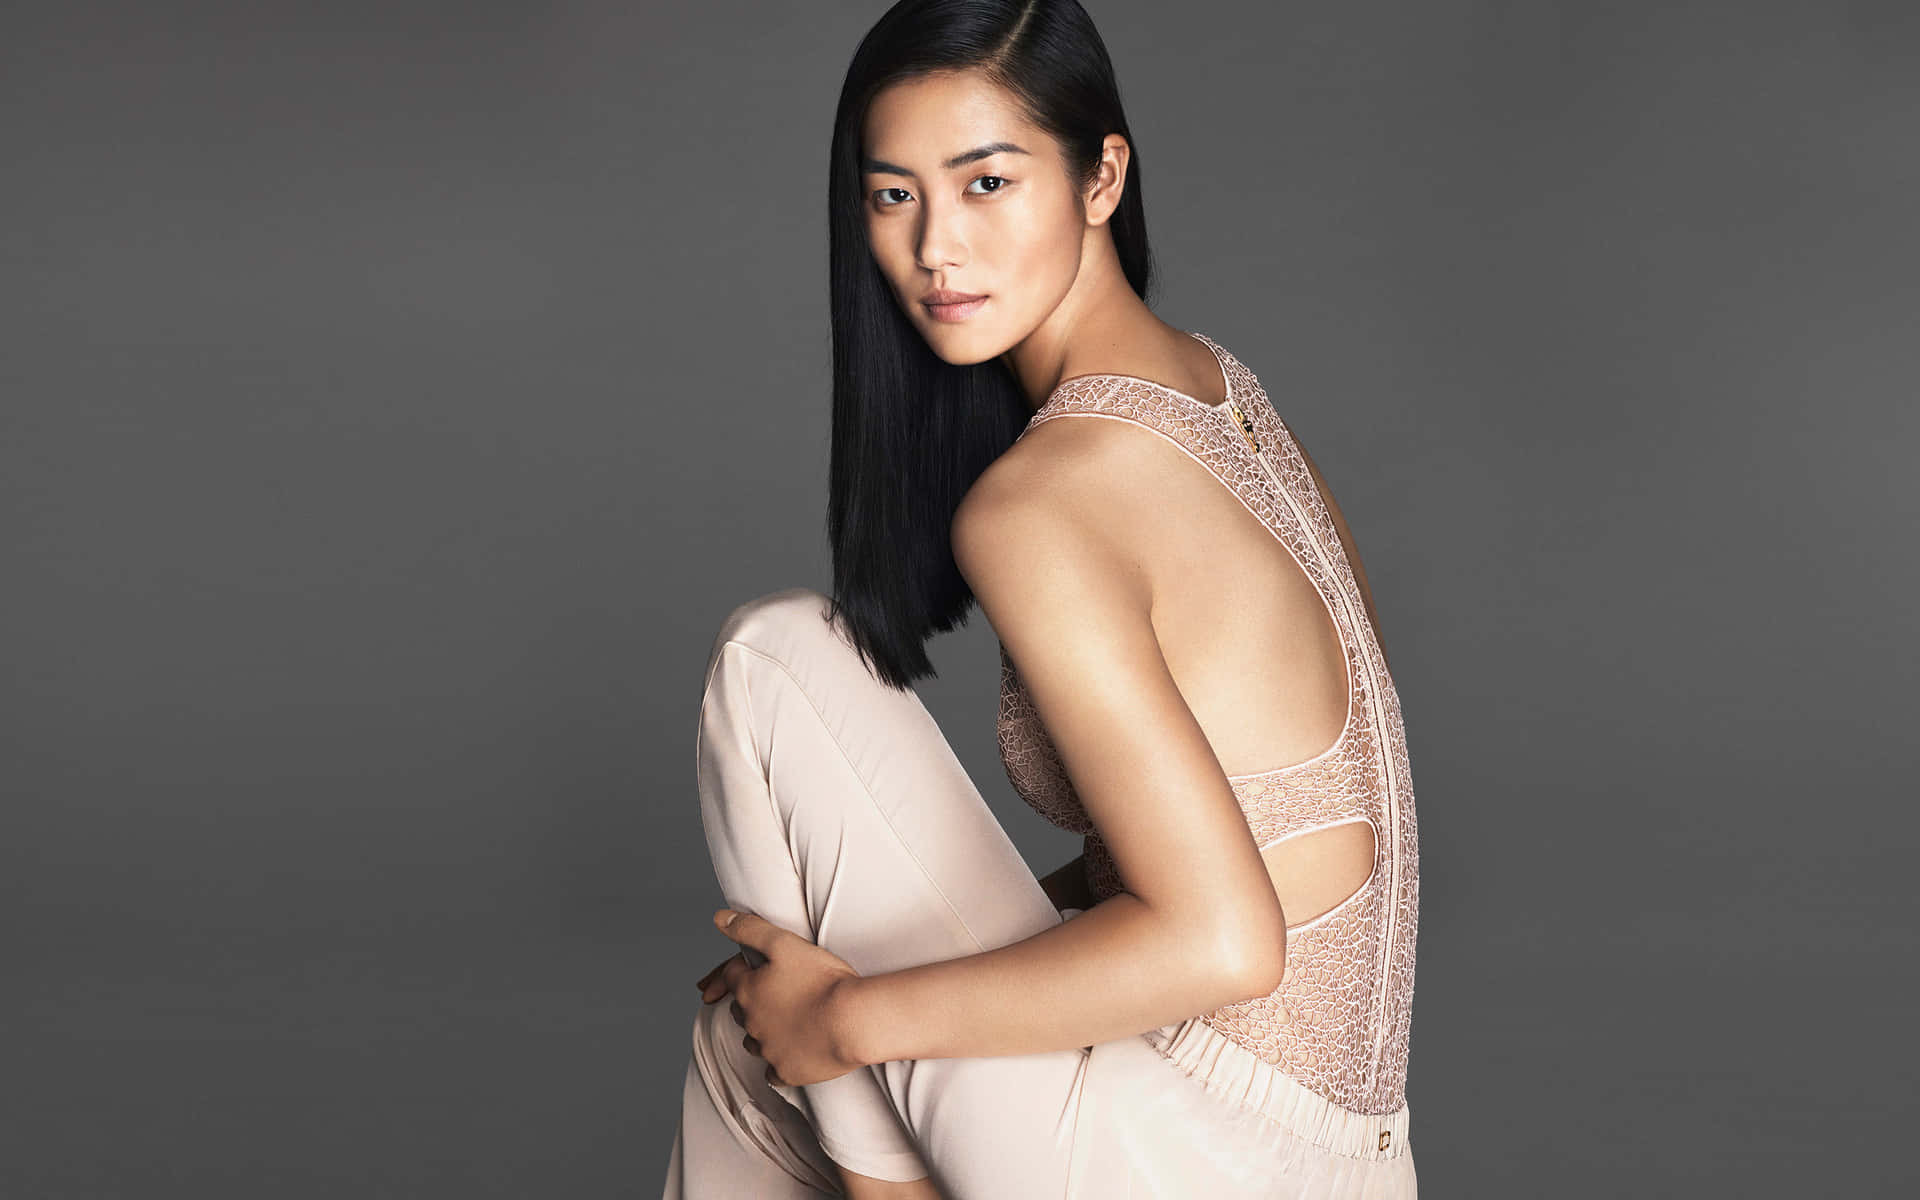 Liu Wen, International Supermodel, Striking A Pose During A Photo Shoot.